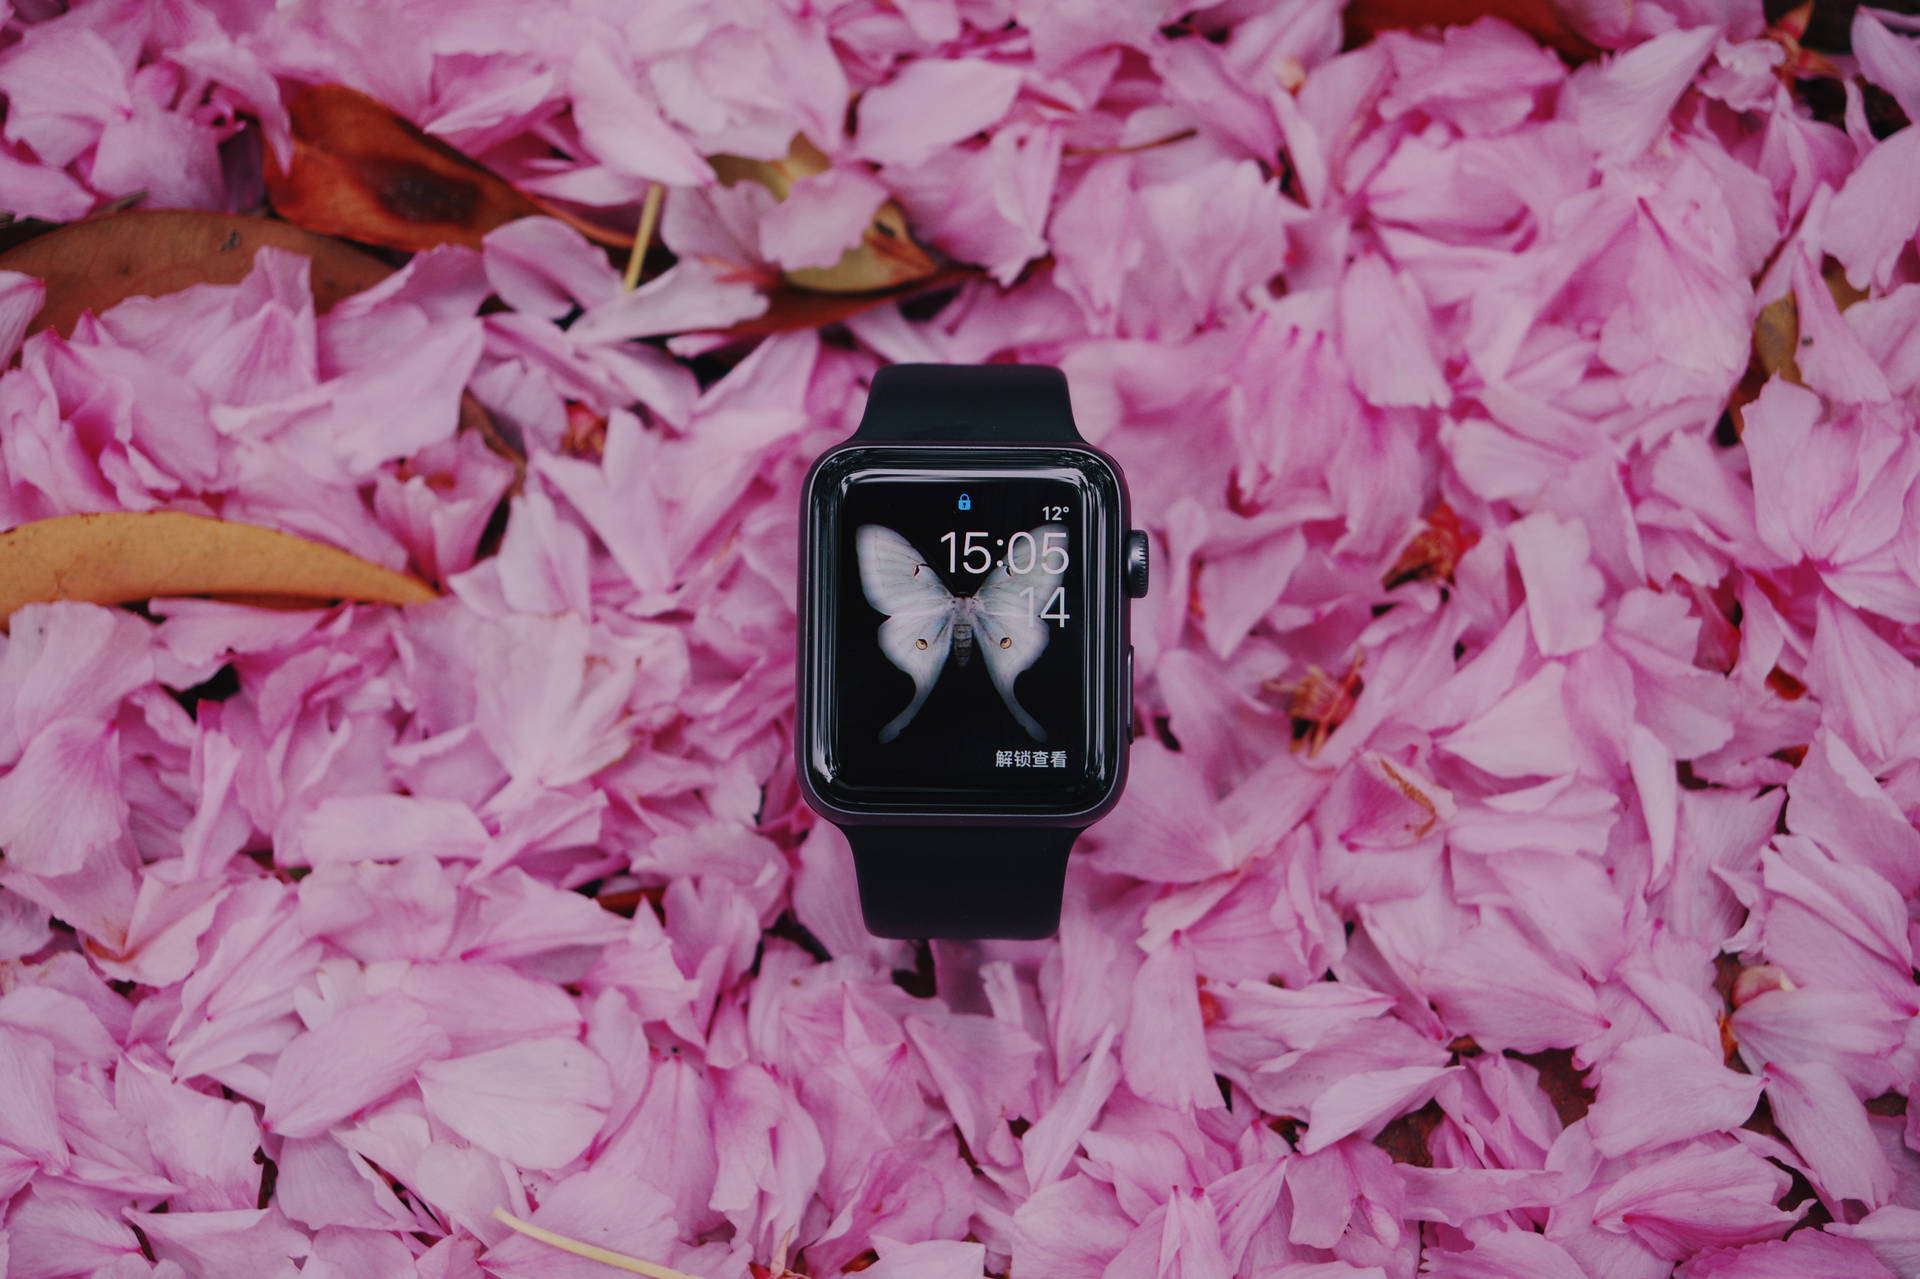 Black Smartwatch On Pink Petals